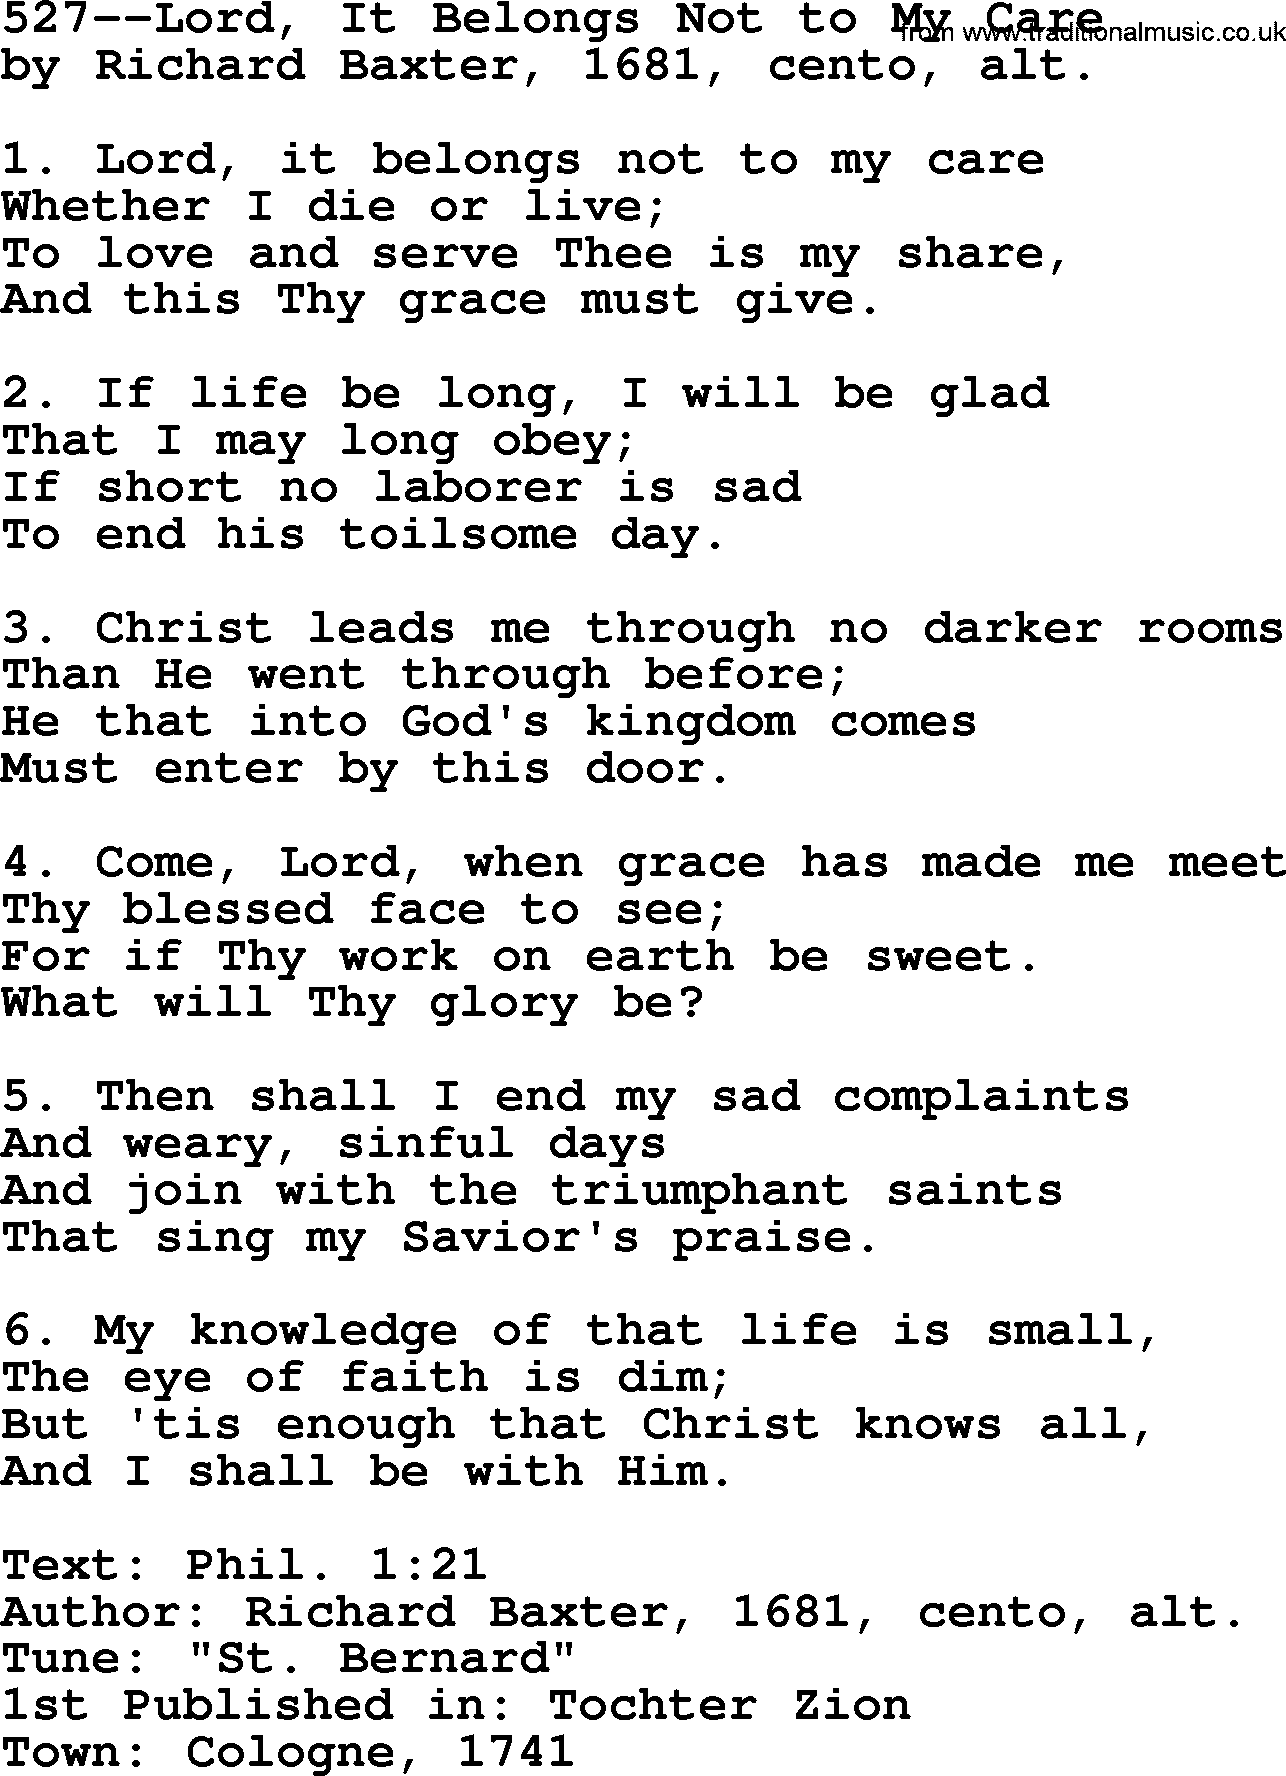 Lutheran Hymn: 527--Lord, It Belongs Not to My Care.txt lyrics with PDF